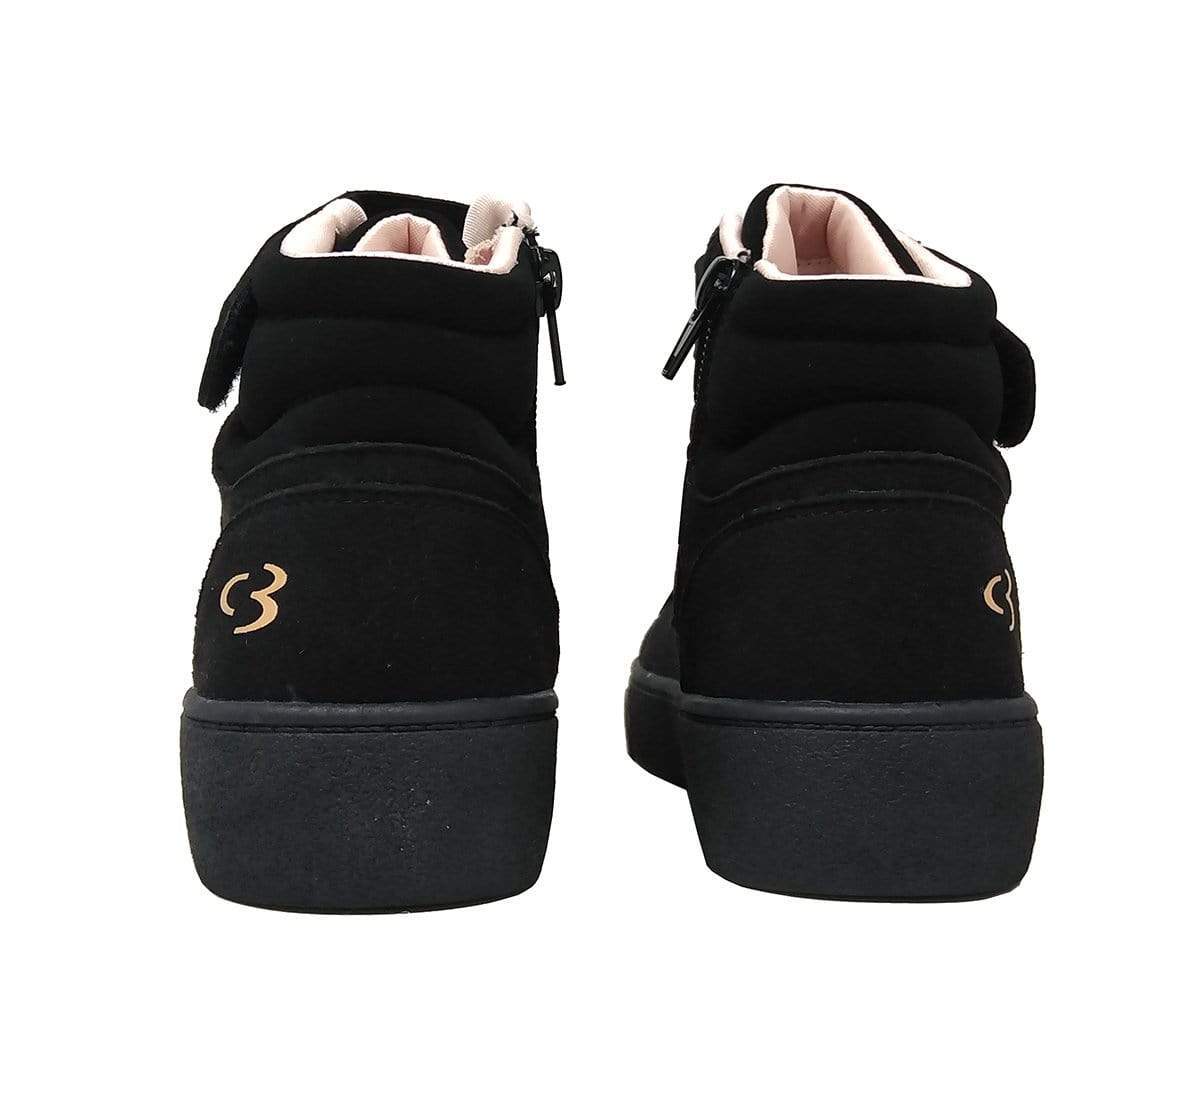 SKECHERS Kids Shoes 34 / Black SKECHERS - Concept 3 High Top Sneakers